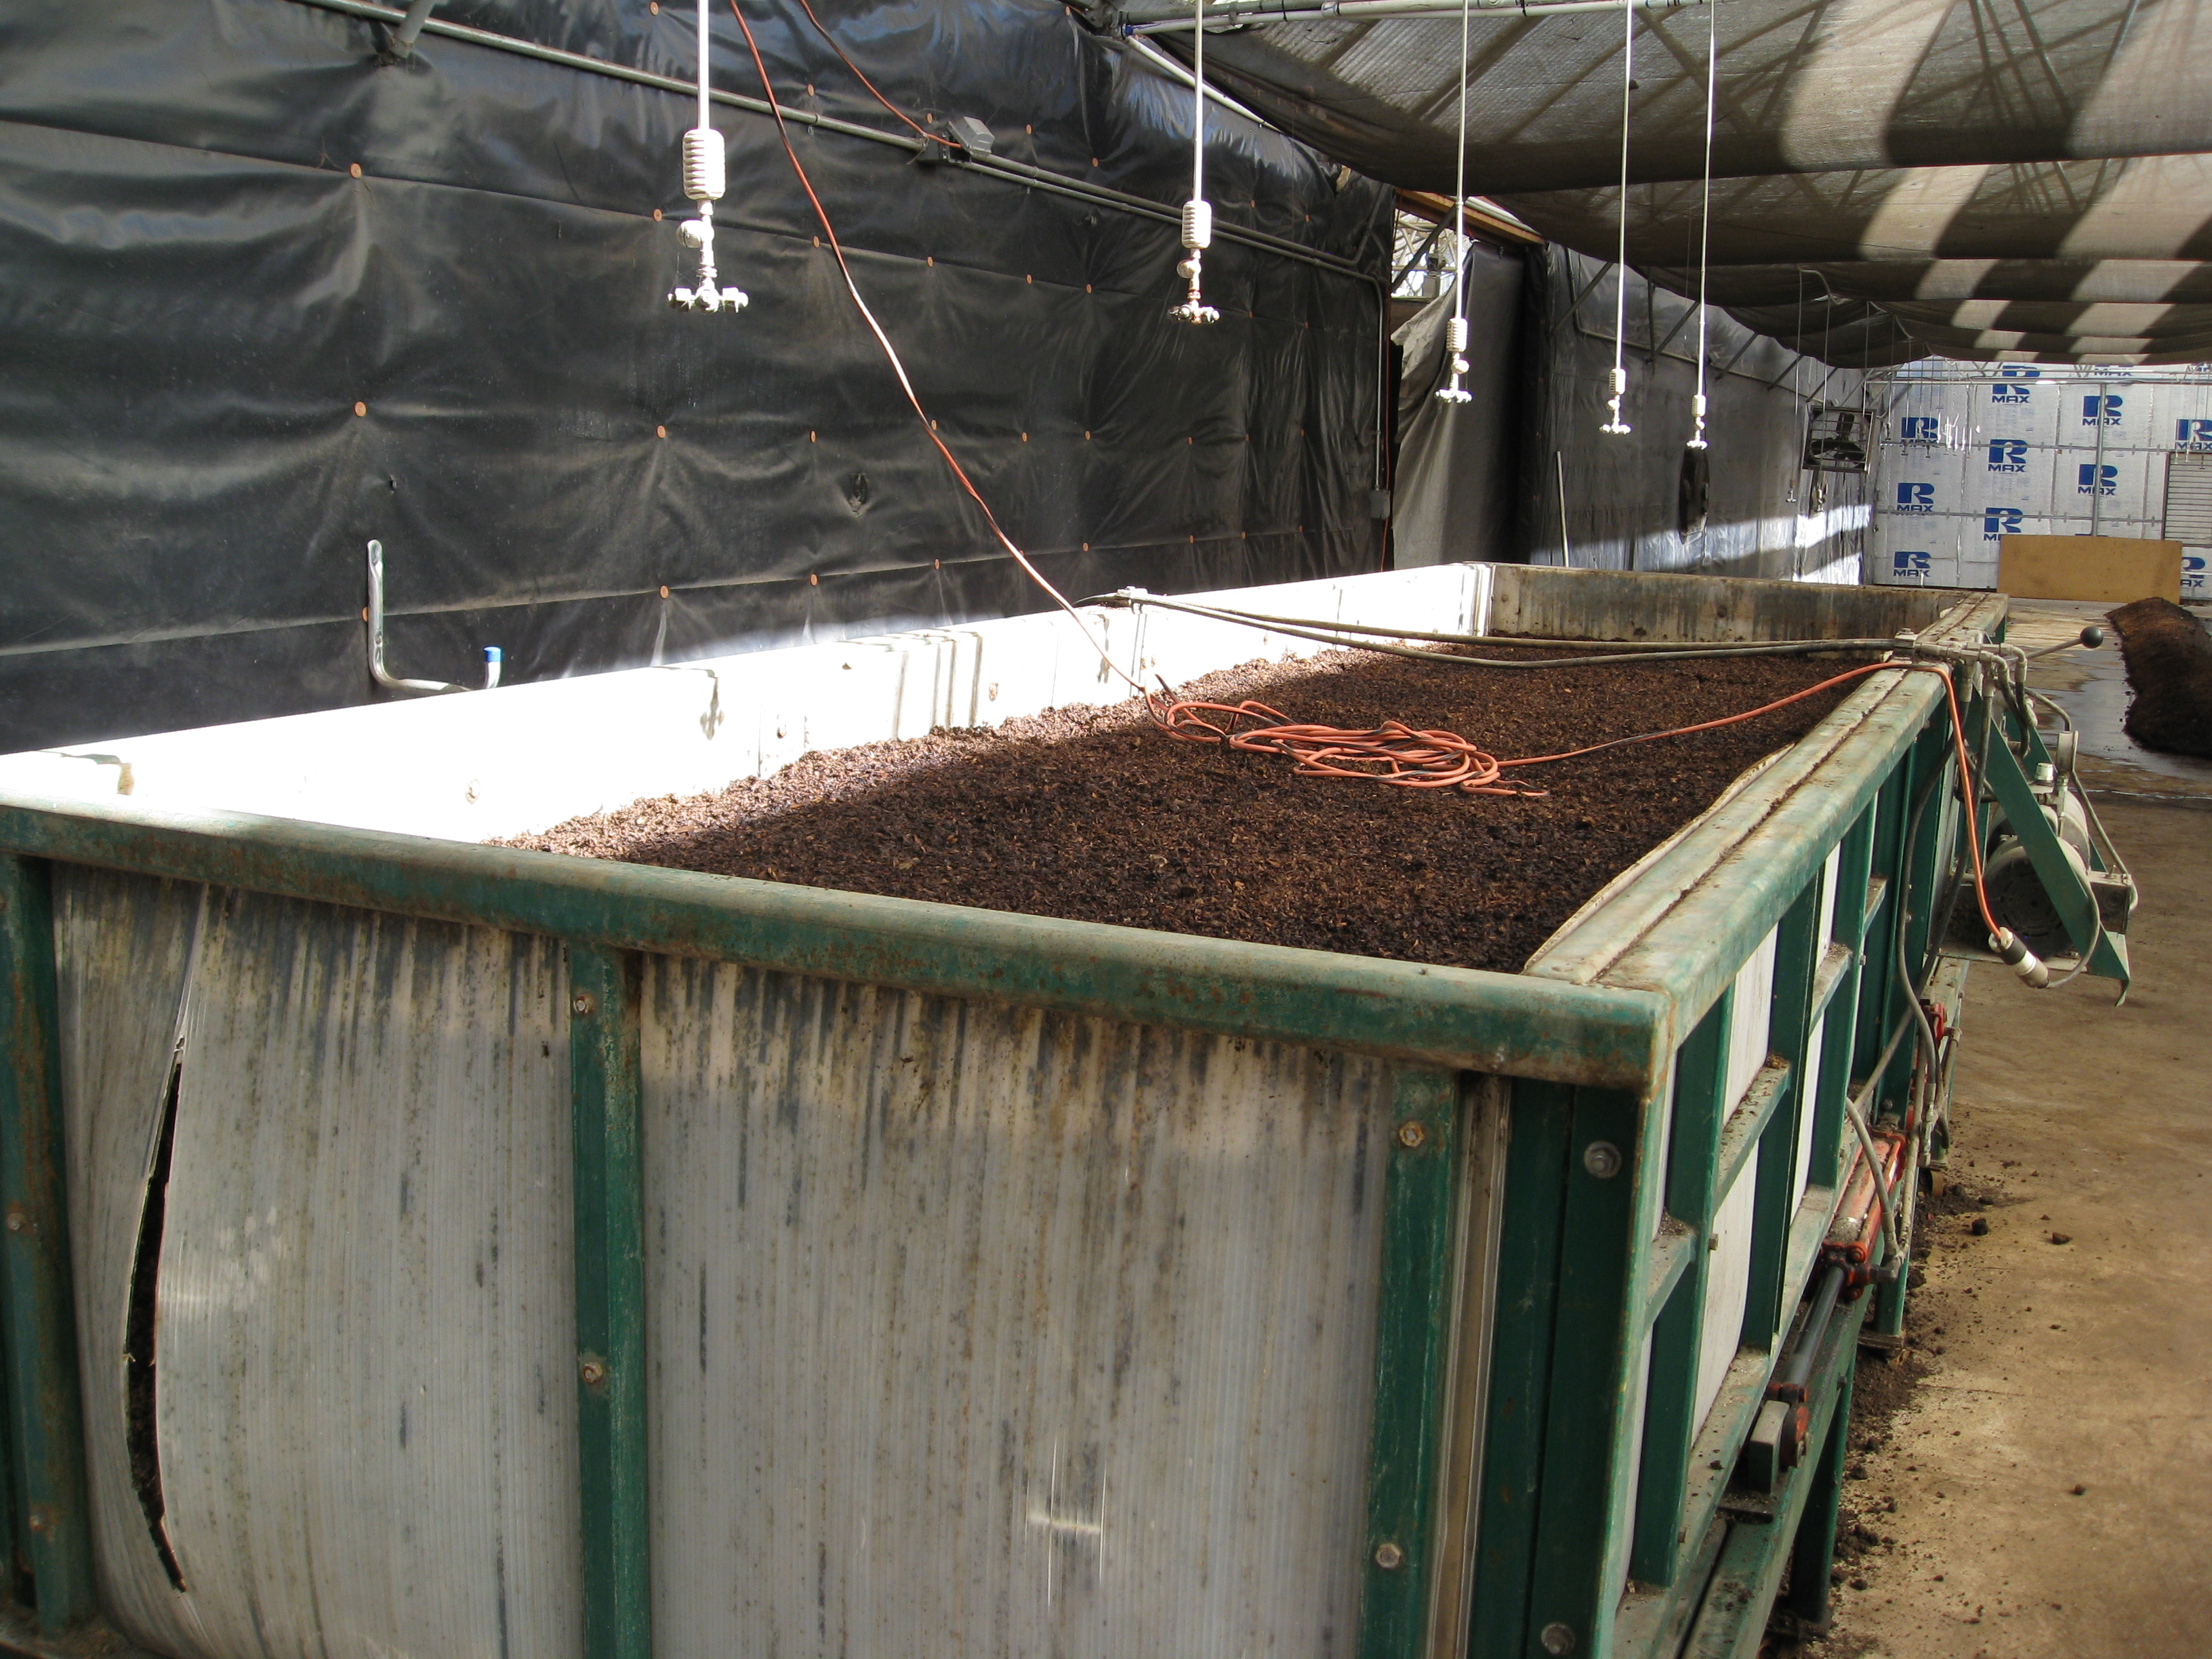 Bioreactor or "flow-through" trough makes harvesting and feeding easy.